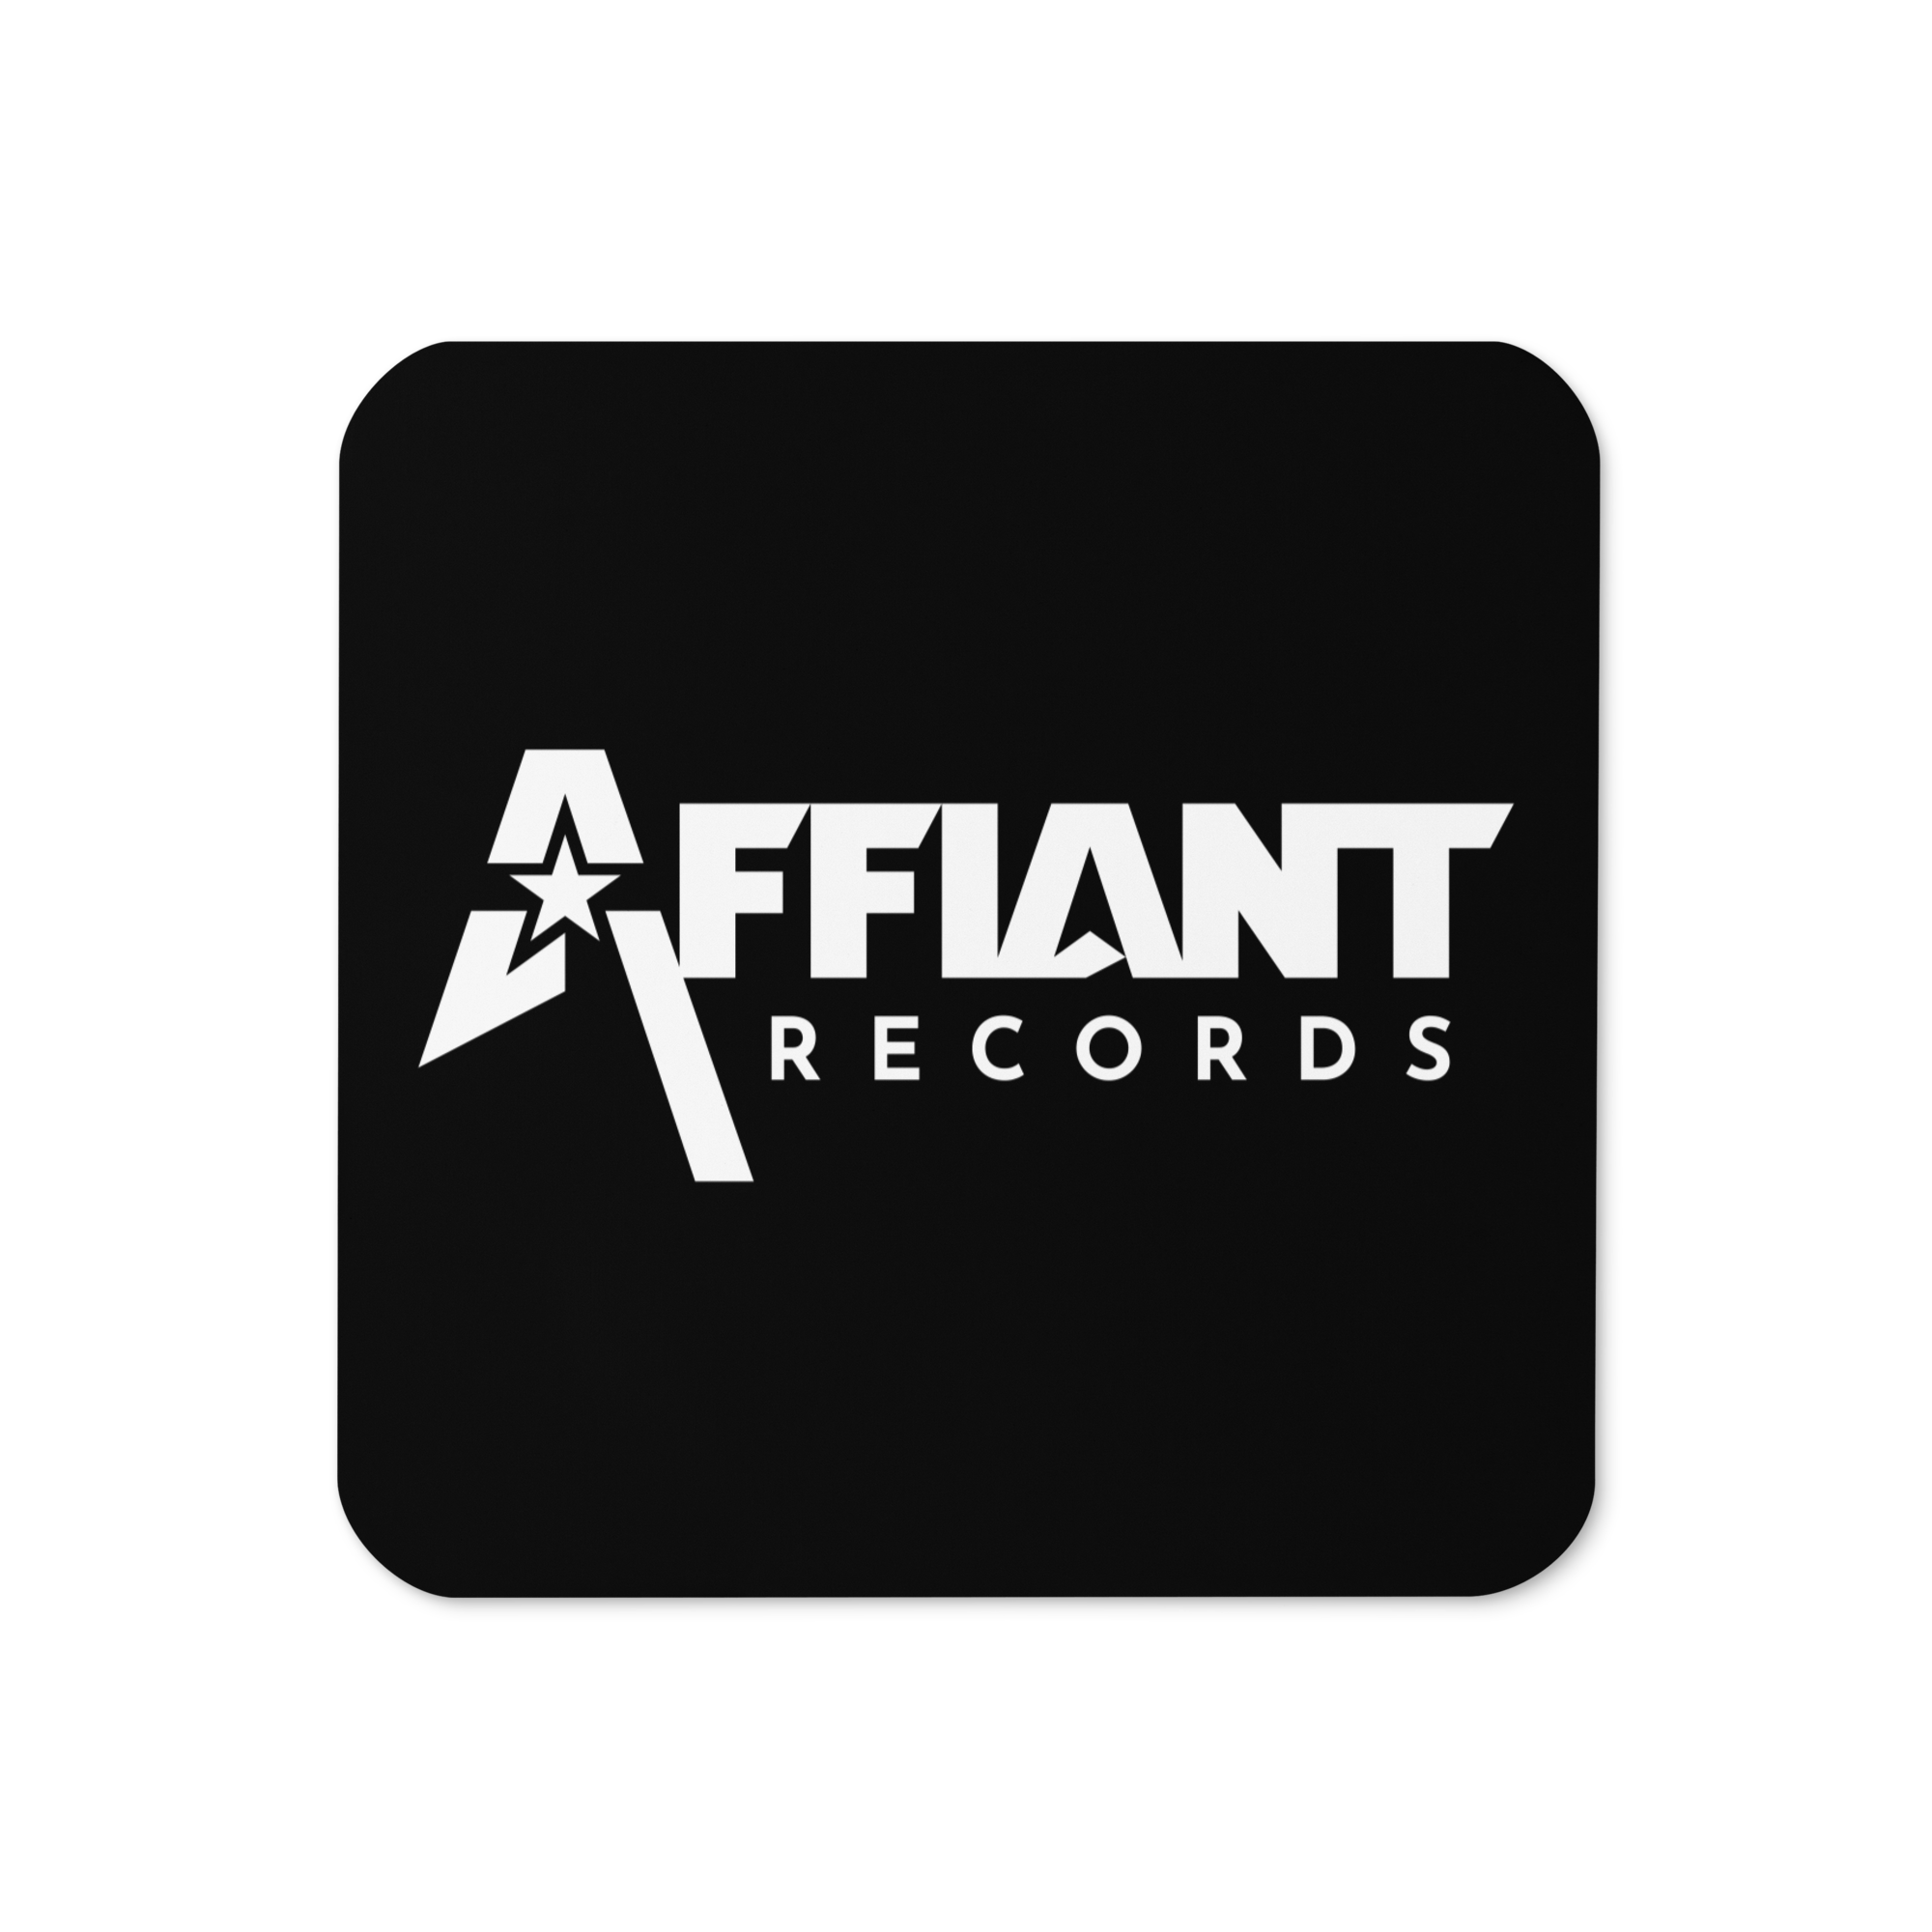 AFFIANT RECORDS - FULL WHITE LOGO CORK BACK COASTER